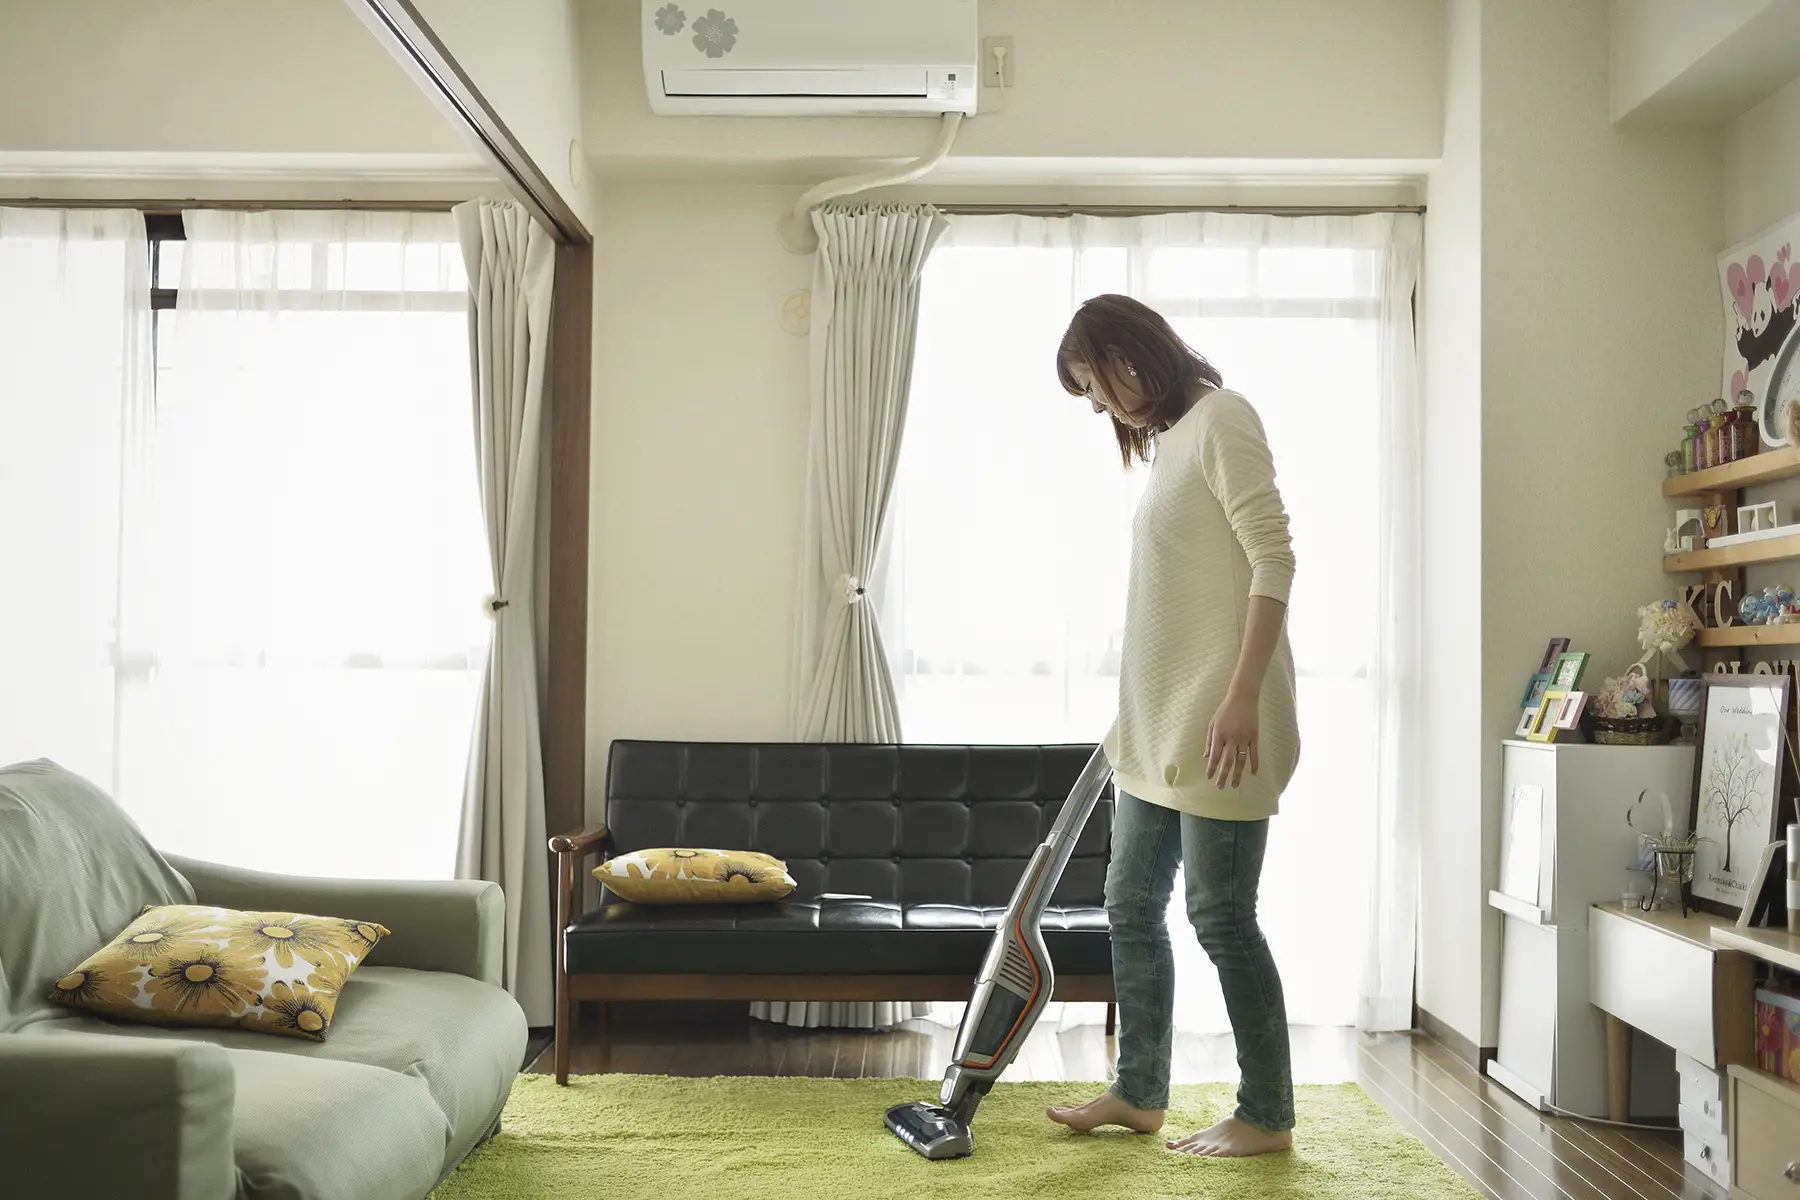 Woman vacuuming her apartment